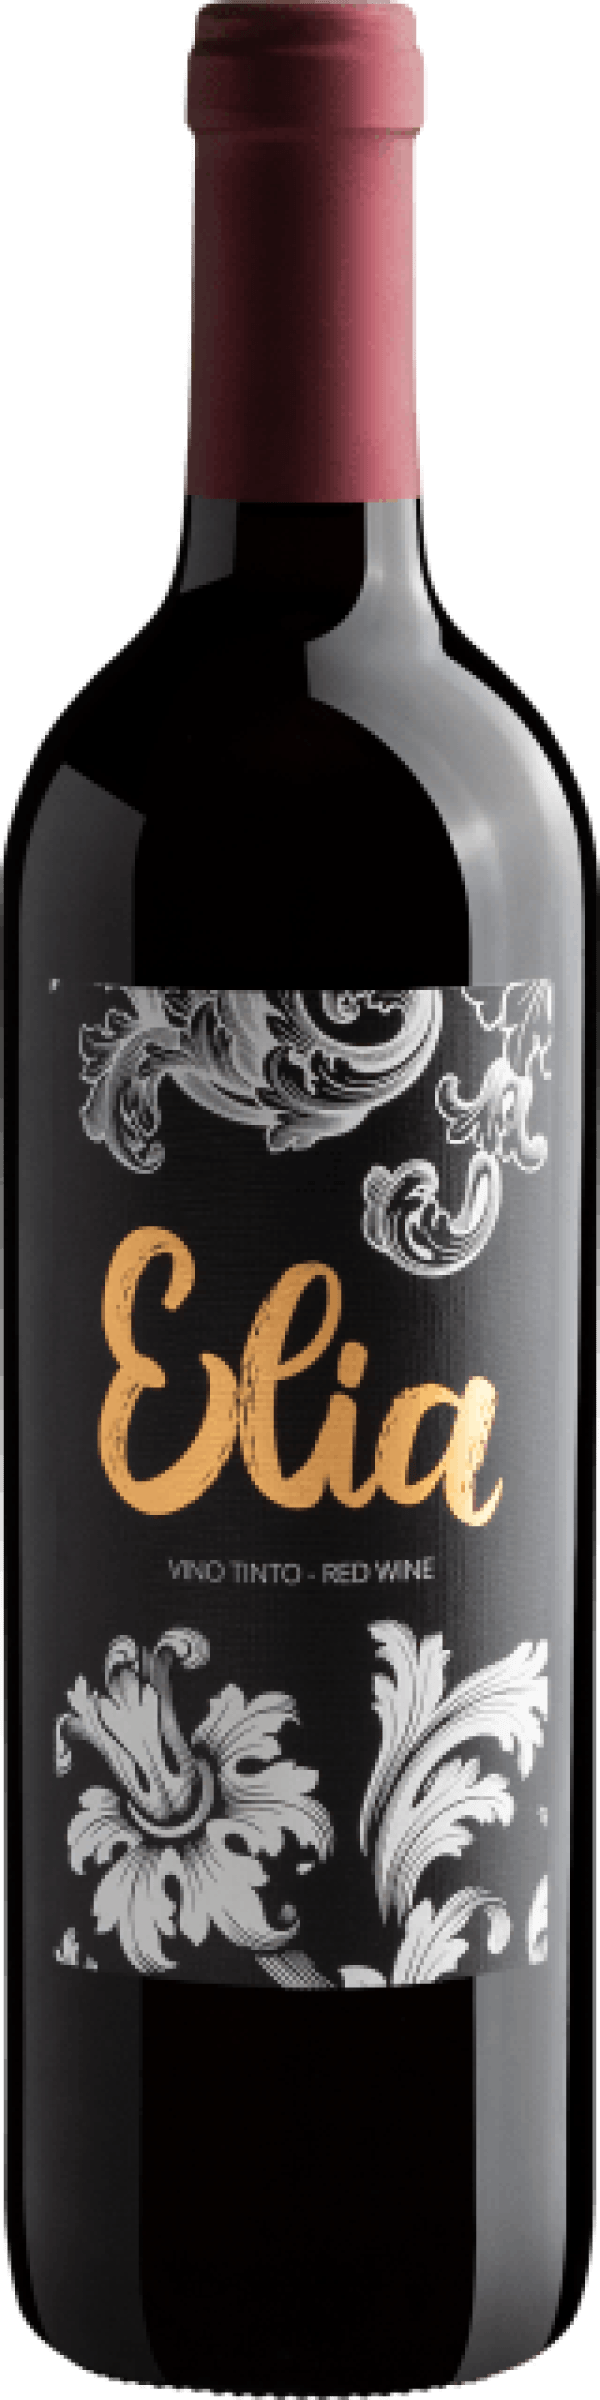 Elia Red Wine